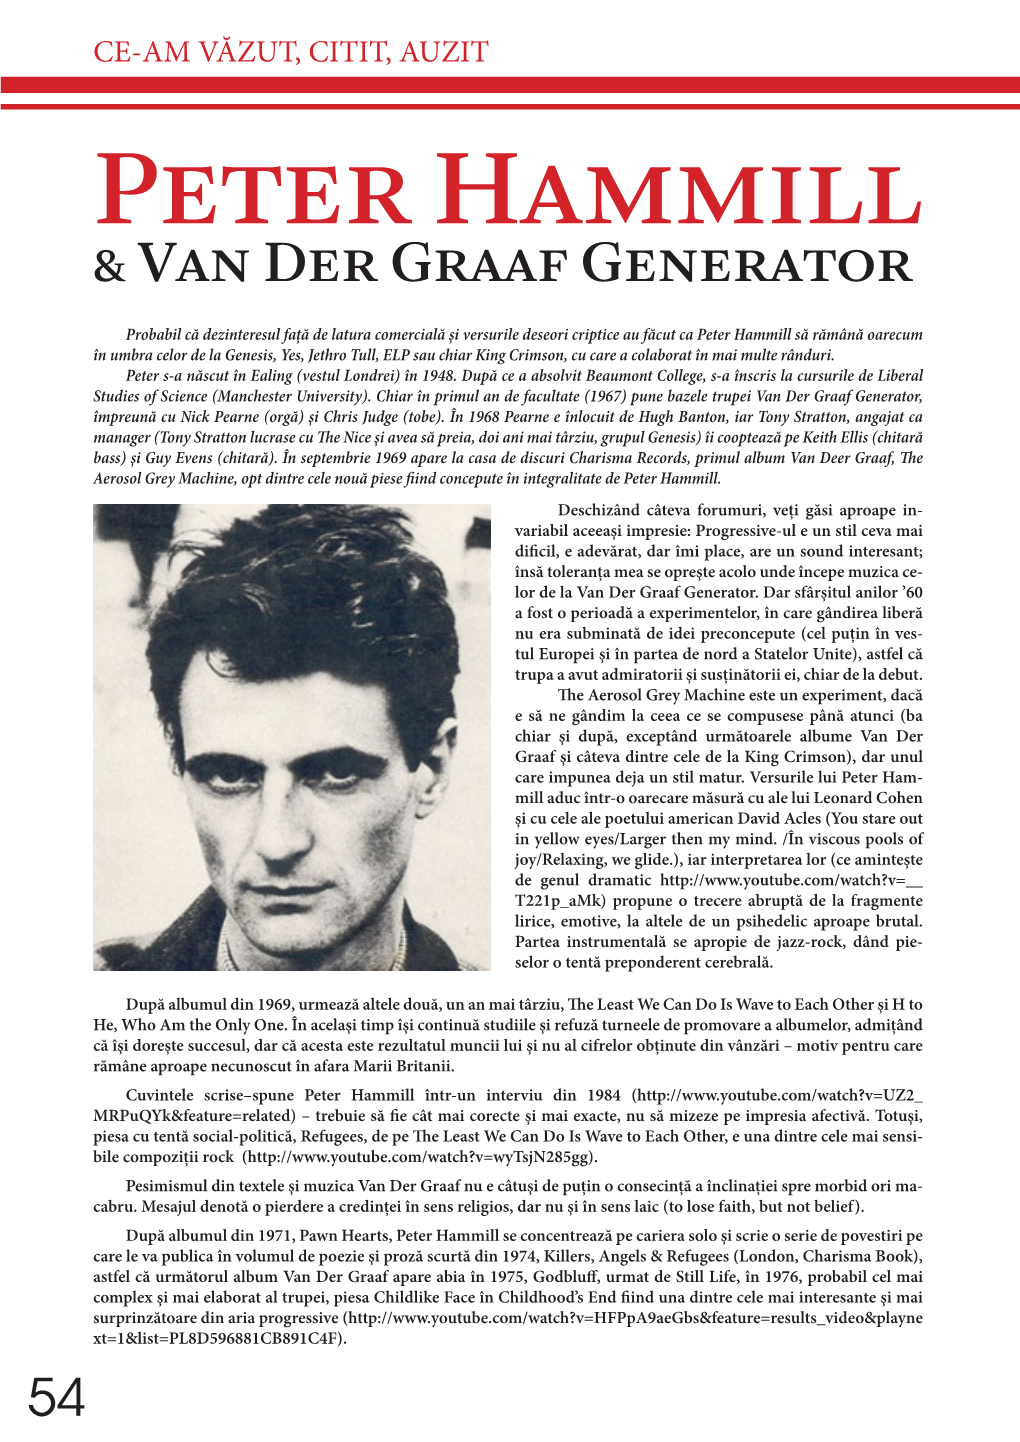 Peter Hammill & Van Der Graaf Generator